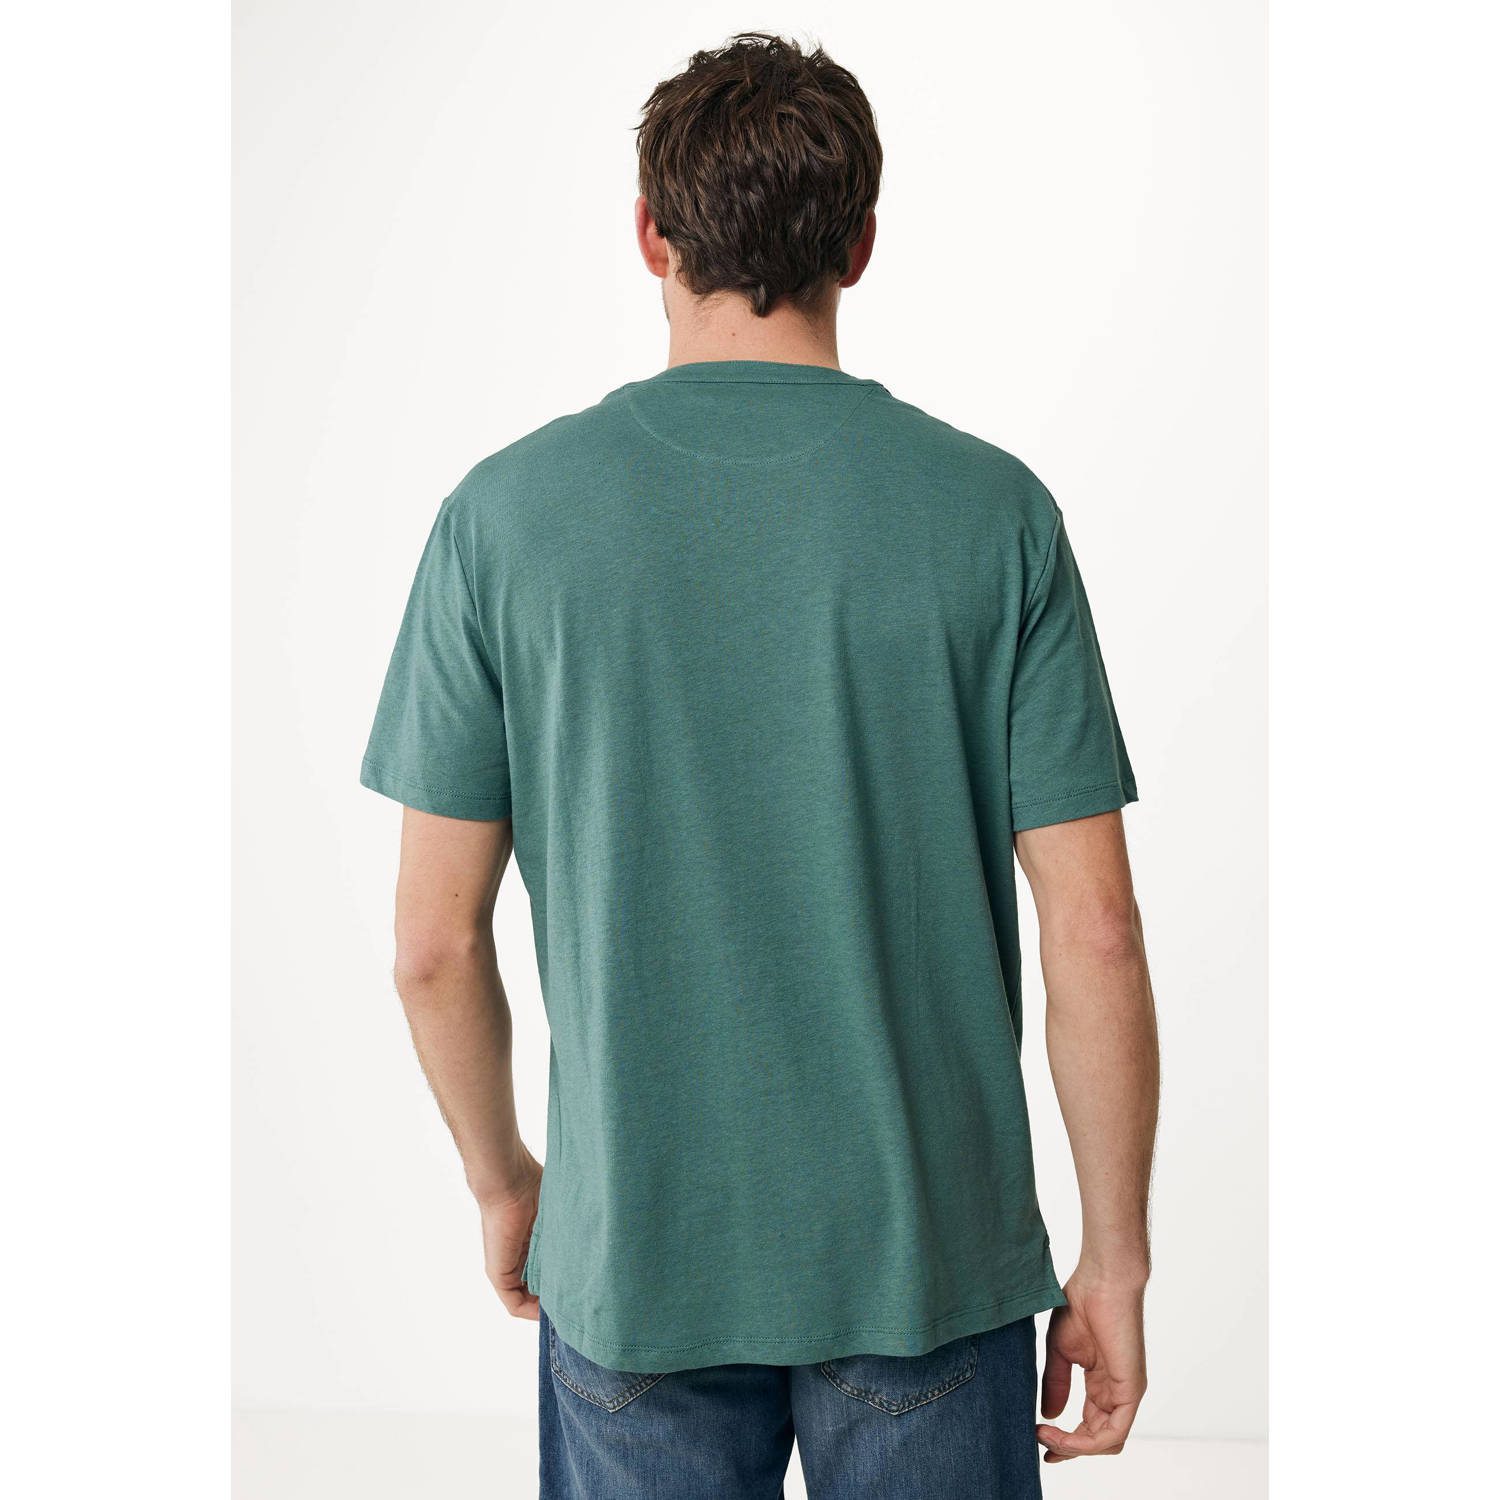 Mexx T-shirt dark green